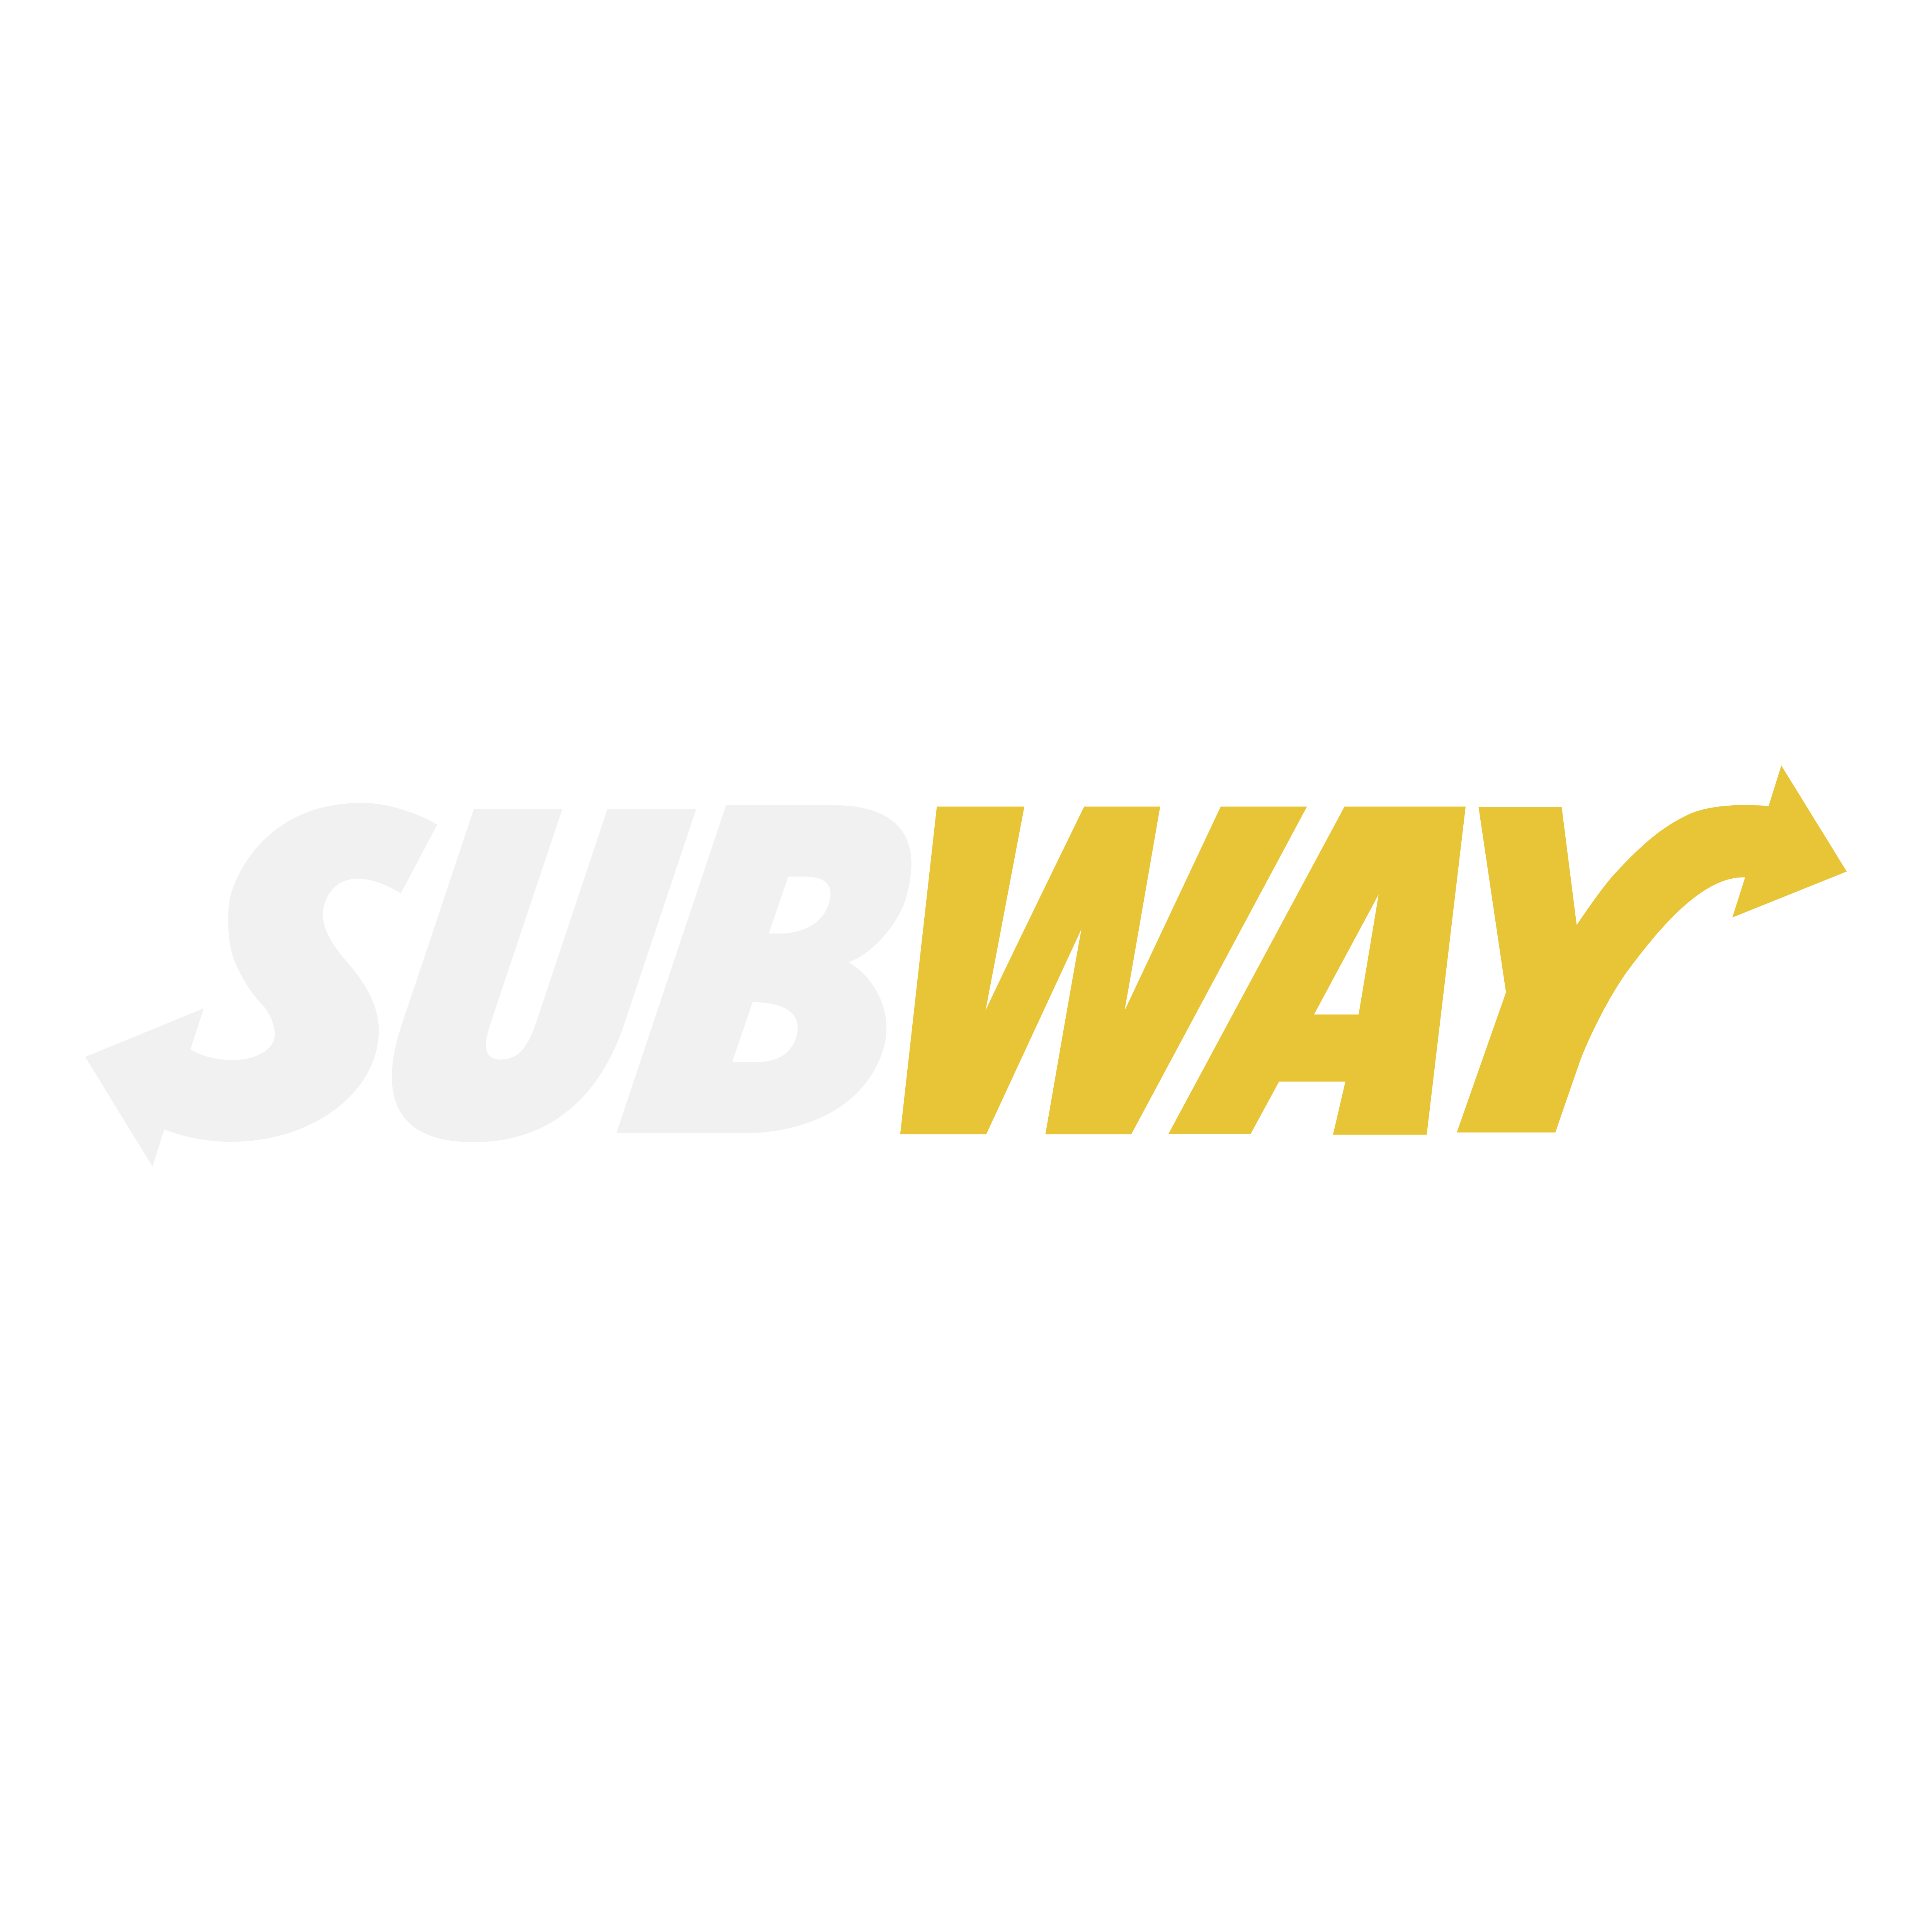 Subway – Logos Download - Subway, Transparent background PNG HD thumbnail